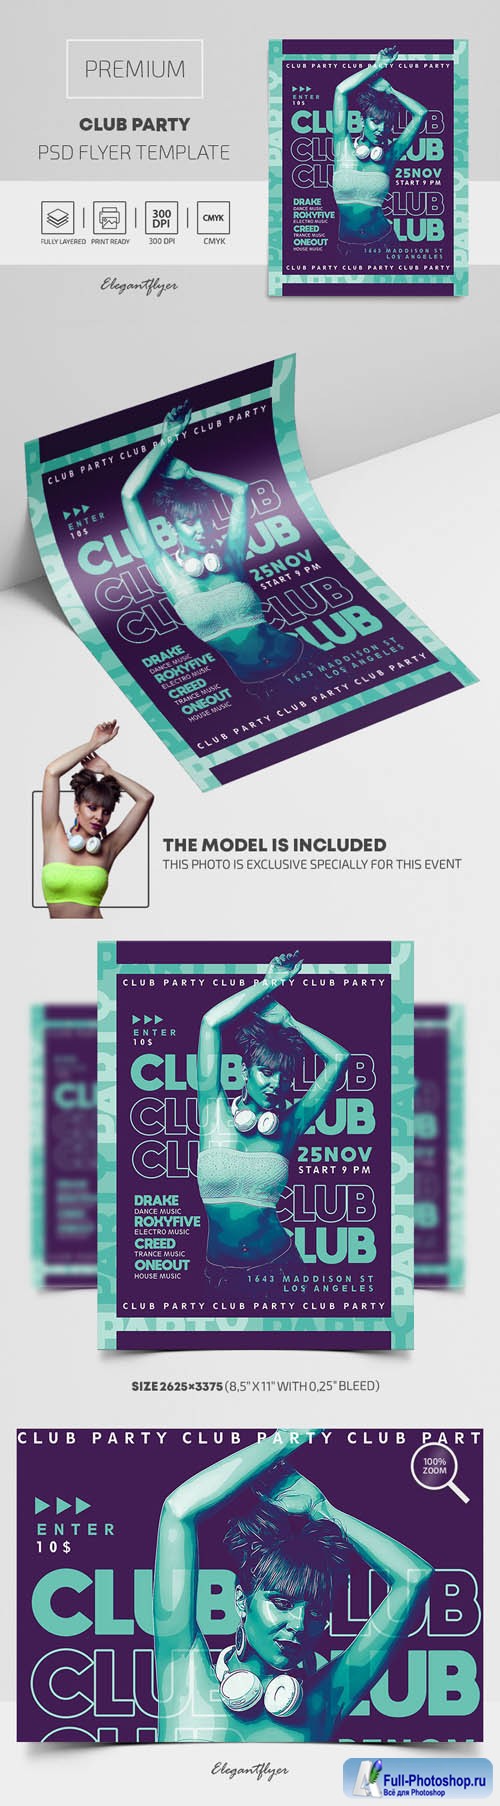 Club Party Premium PSD Flyer Template vol 2